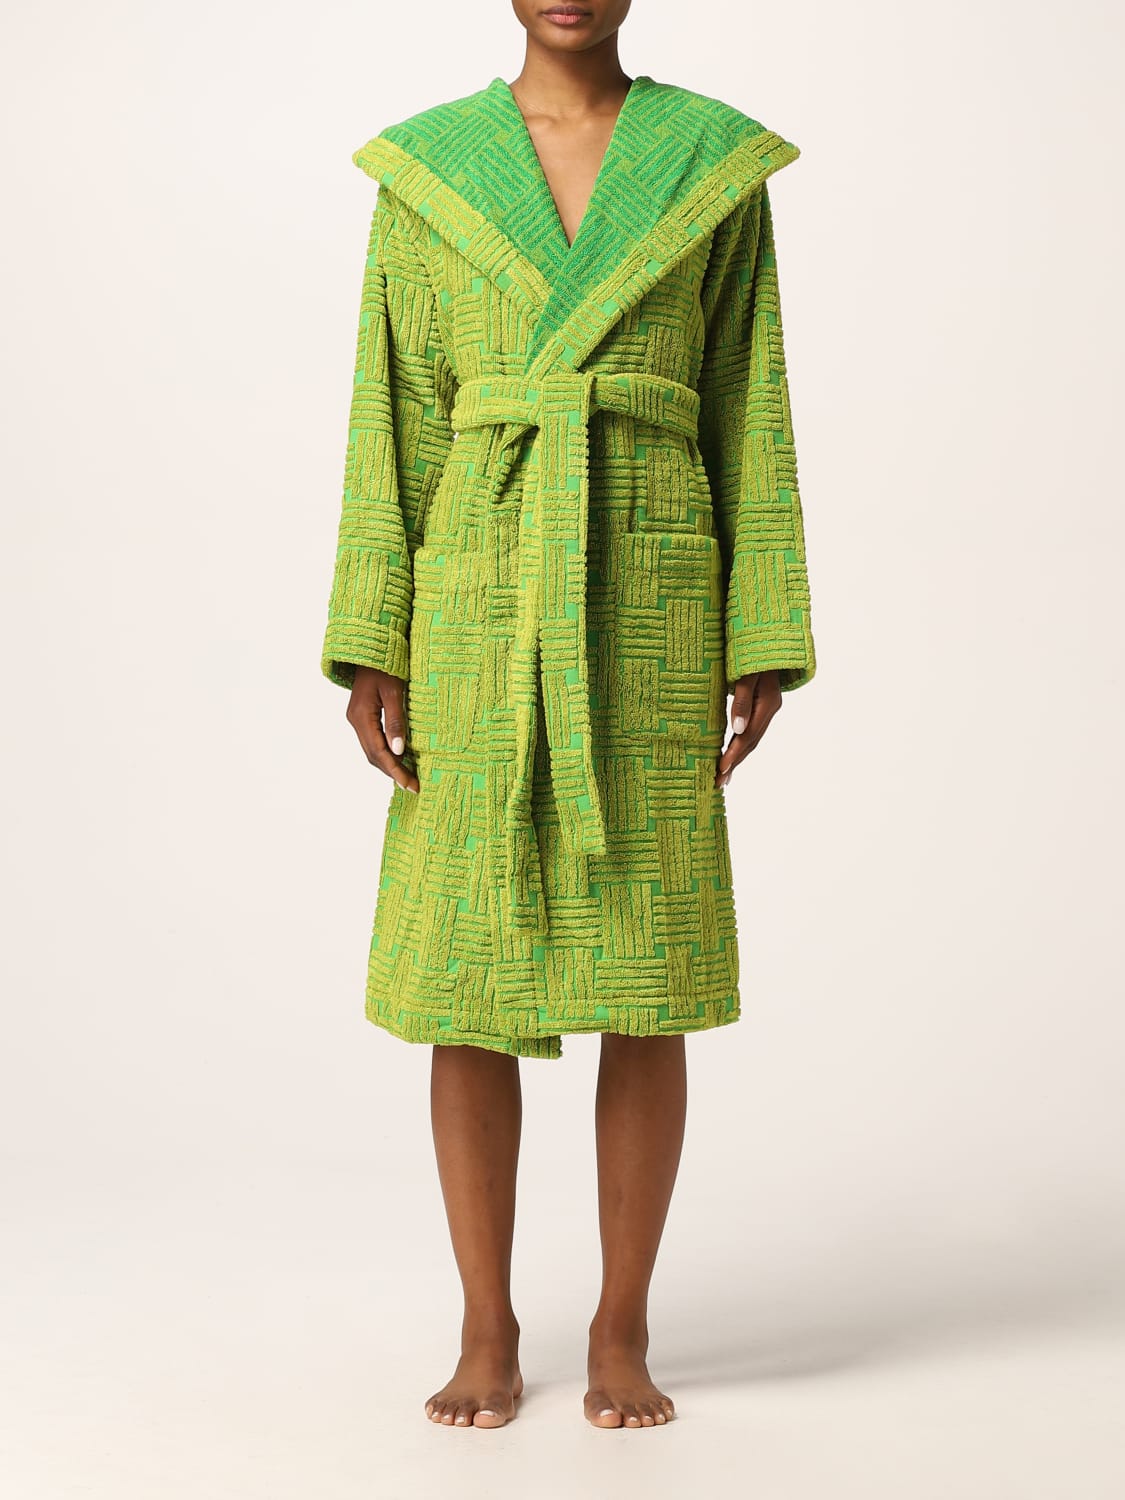 indbildskhed over Specificitet BOTTEGA VENETA: intreccio cotton bathrobe - Green | Bottega Veneta bathrobe  656096V1MY0 online at GIGLIO.COM